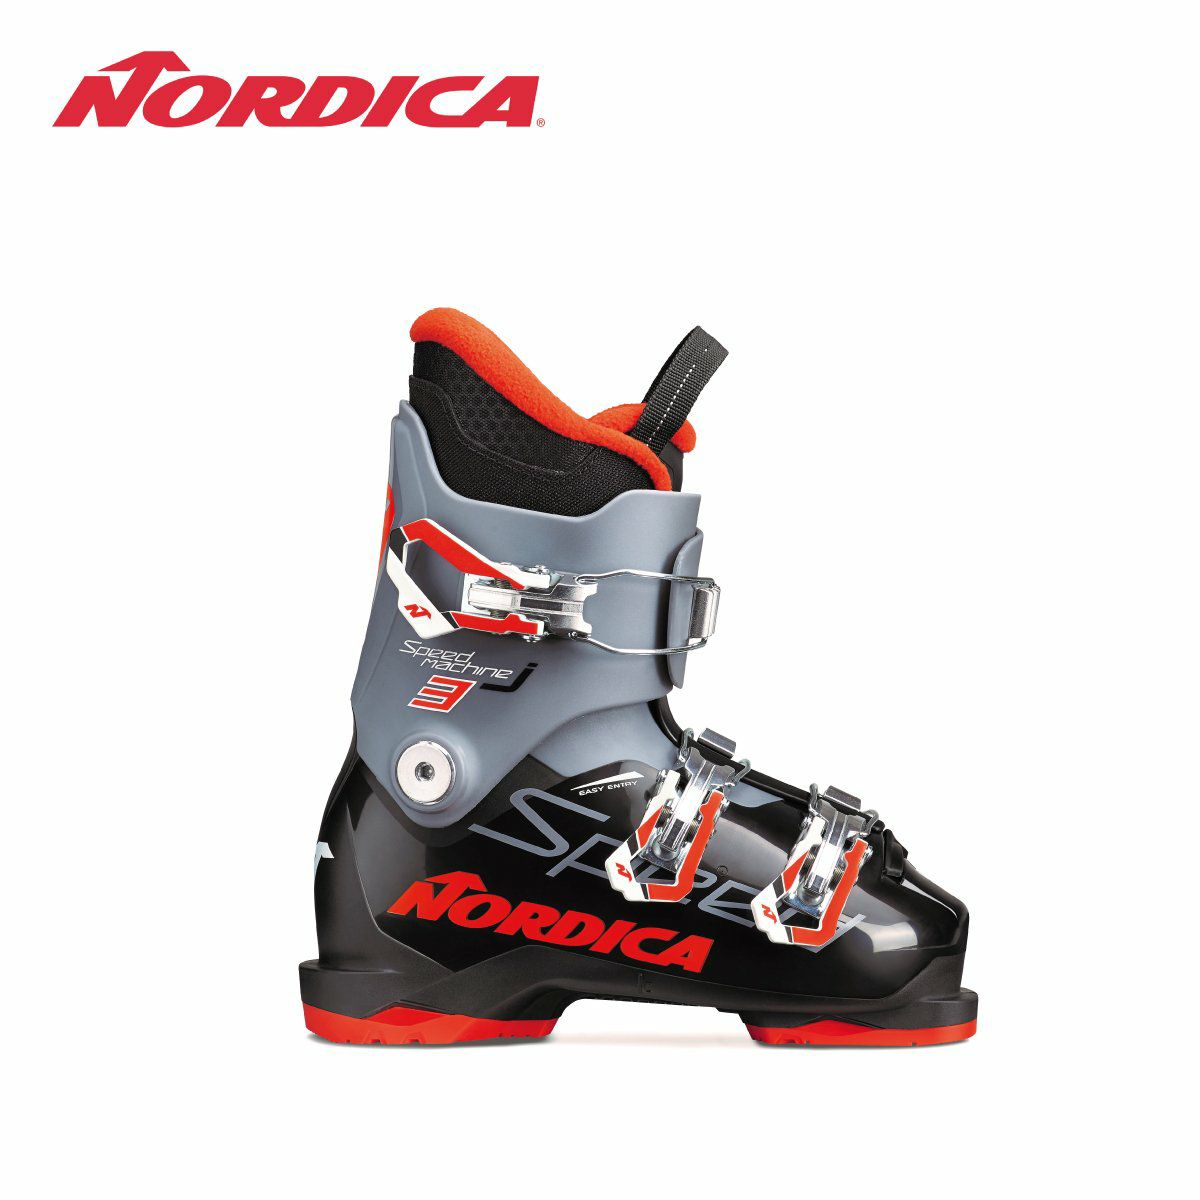 NORDICA ジュニアスキー130cm ブーツ23cm ストック100cm - 板